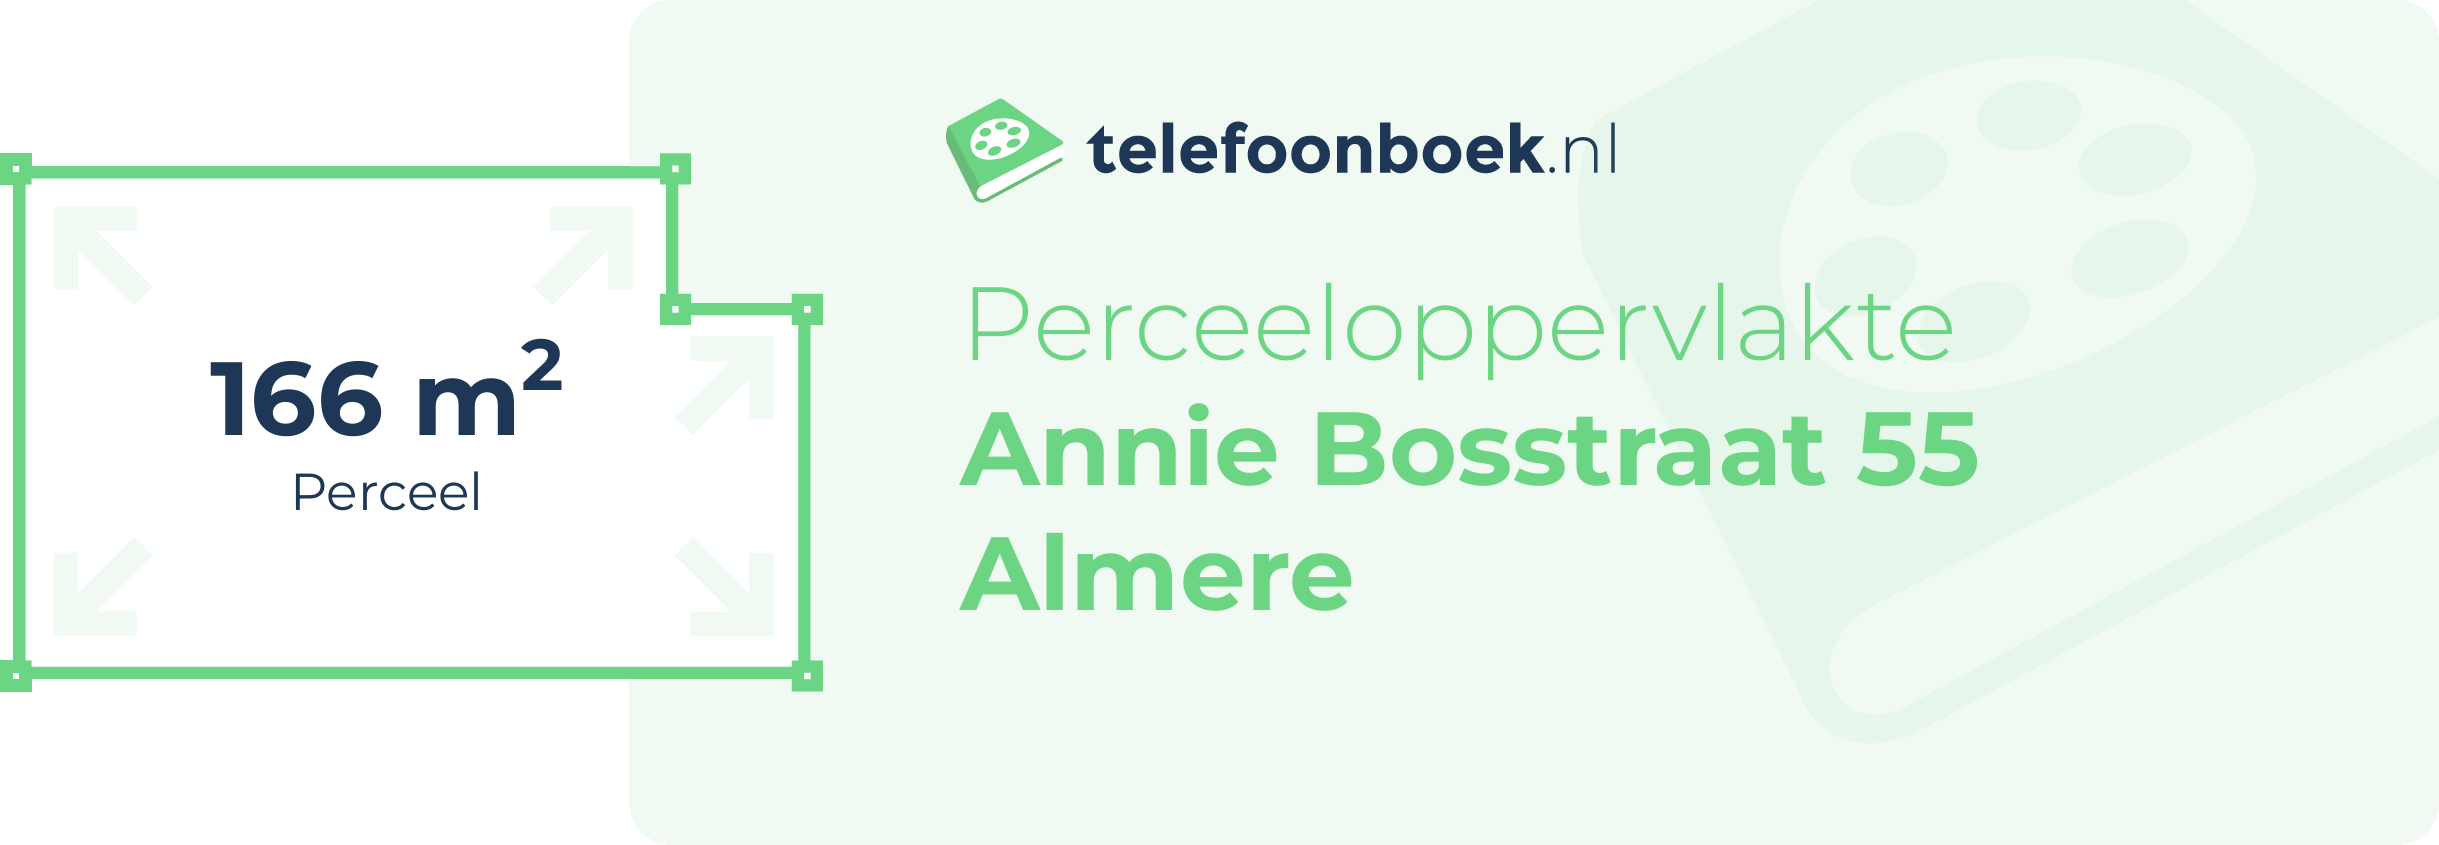 Perceeloppervlakte Annie Bosstraat 55 Almere